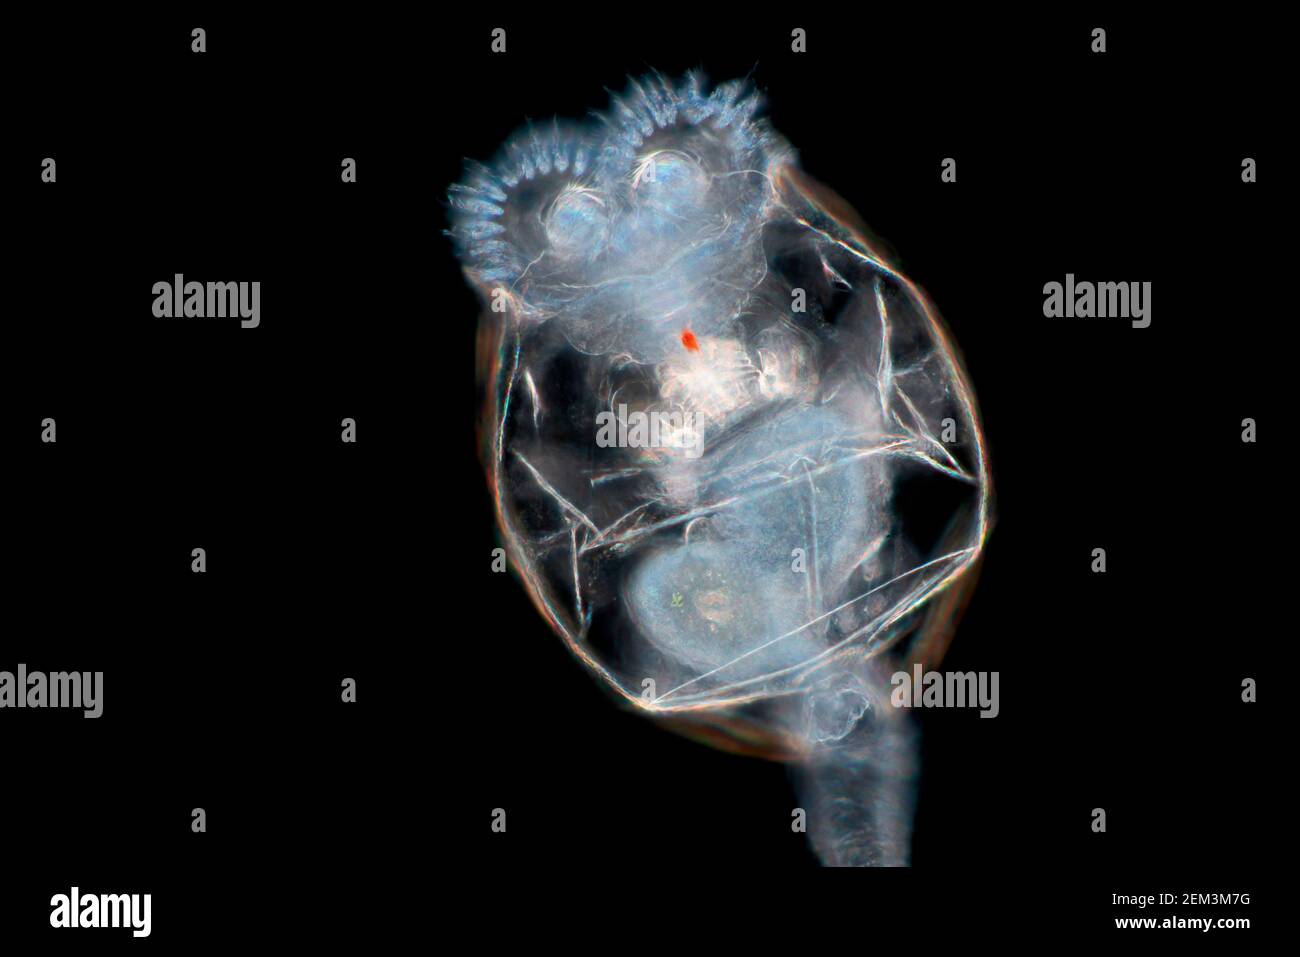 rotifers (Rotatoria), dark field microscopic image, magnification x100 related to 35 mm Stock Photo